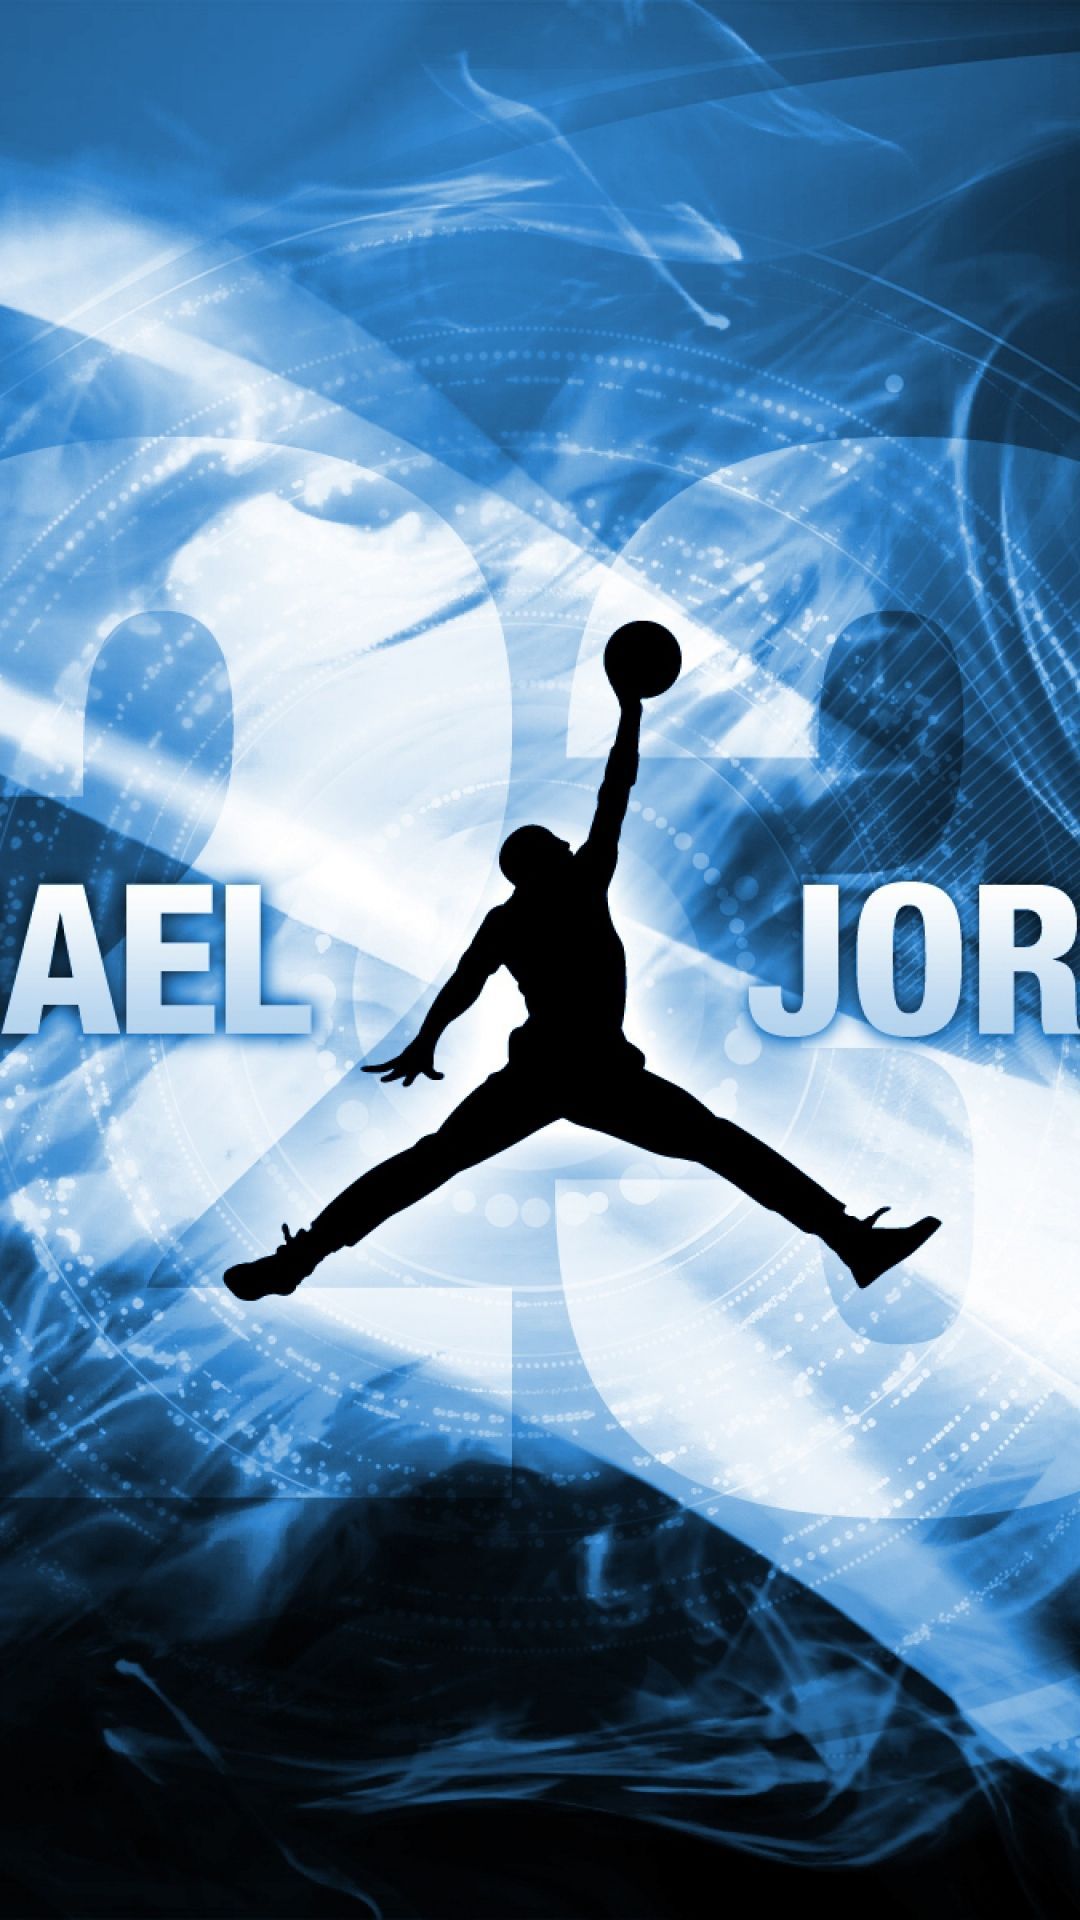 Download Wallpaper 1080x1920 Michael jordan, Basketball player ...